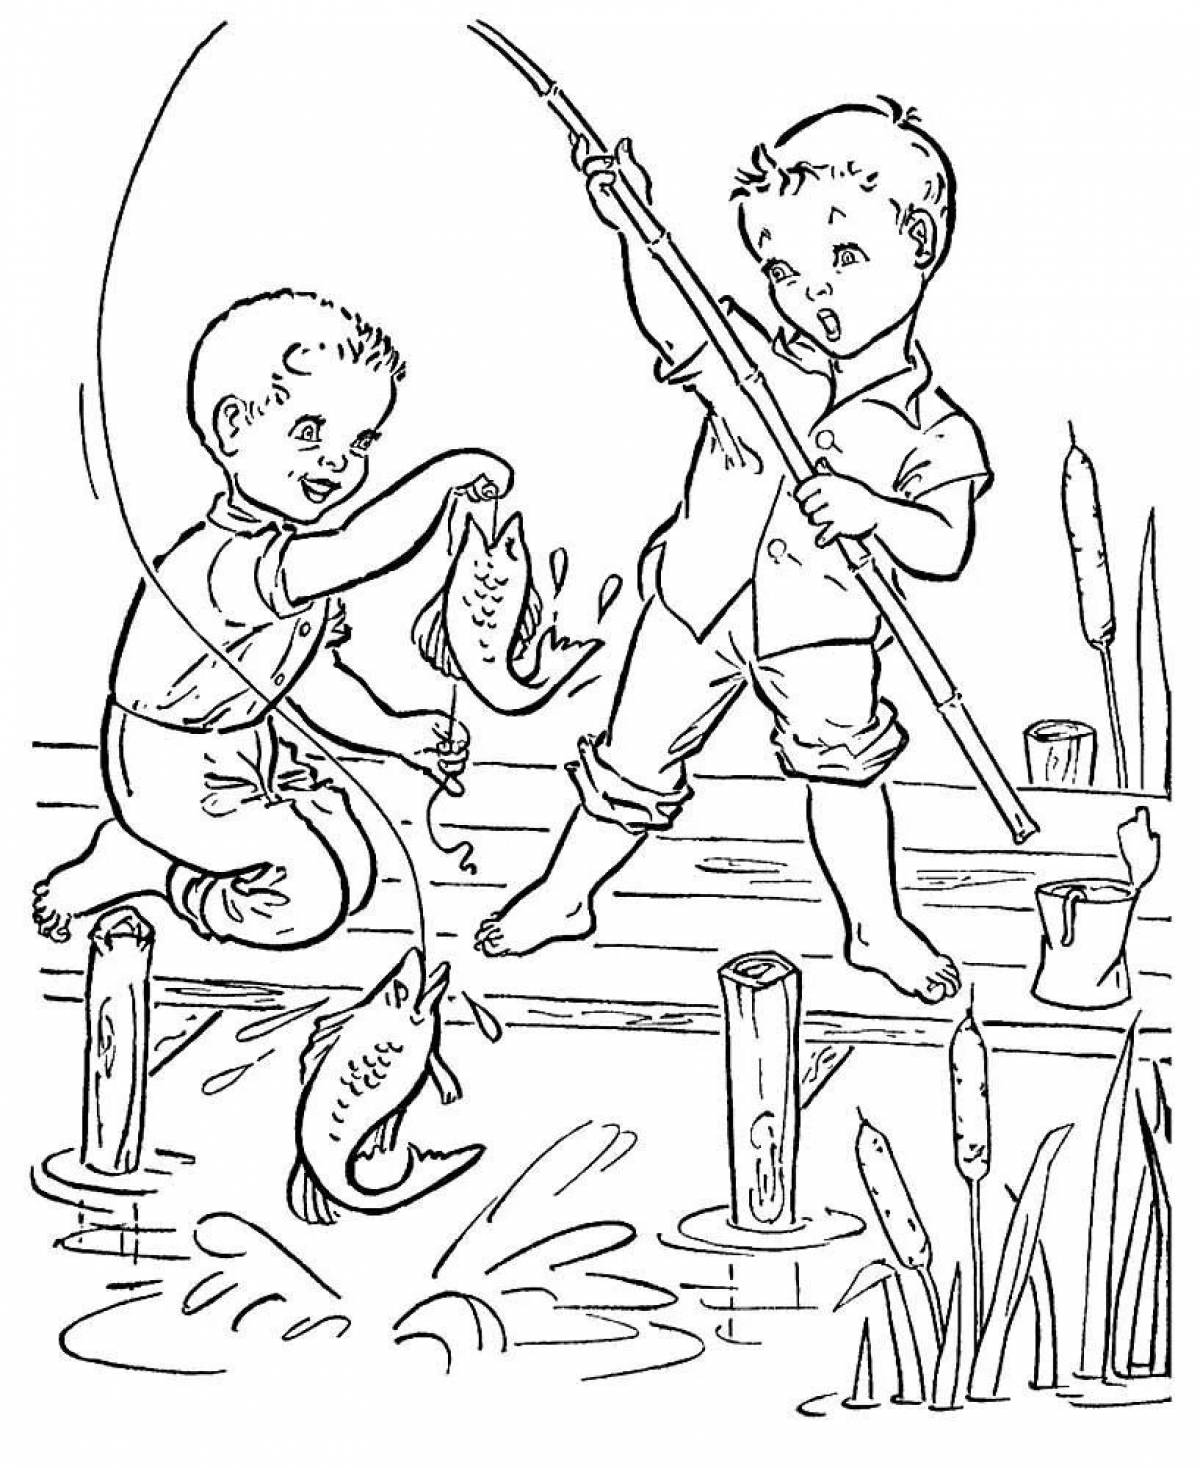 Fishing for kids #4